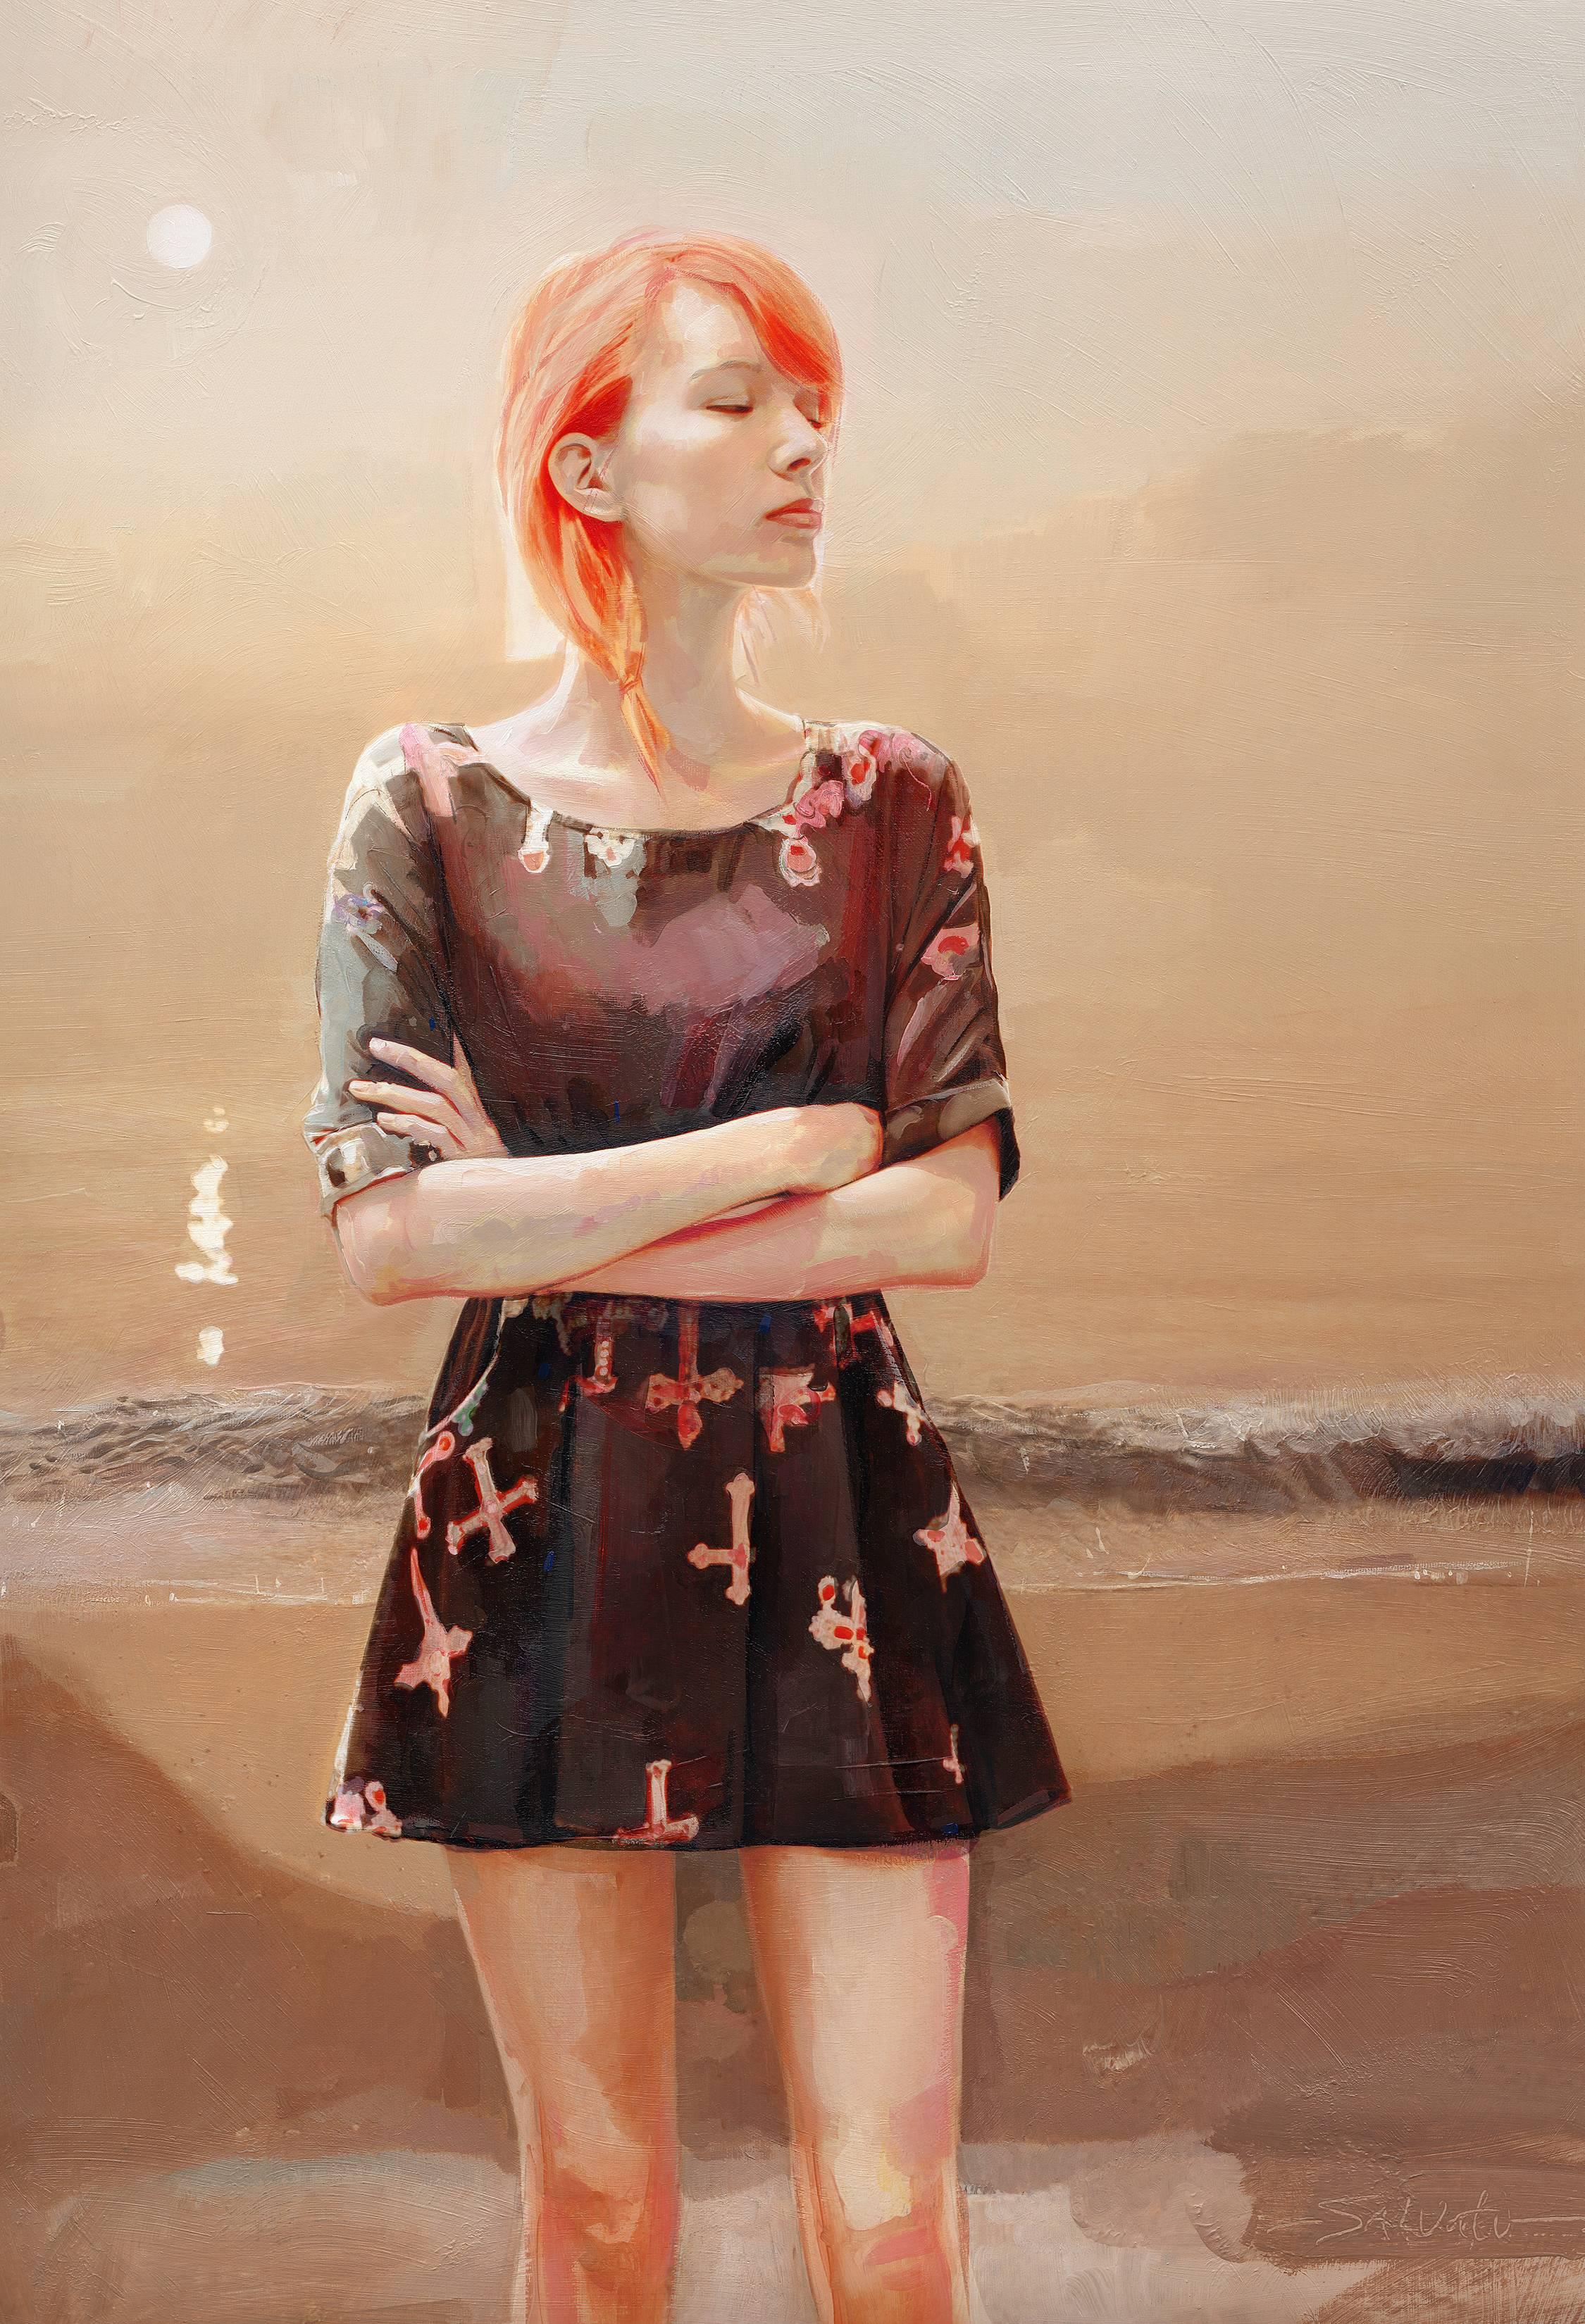 Jim Salvati Portrait Painting - Simone 2, Realism Oil Painting, Contemporary Portrait, Painting of Girl 